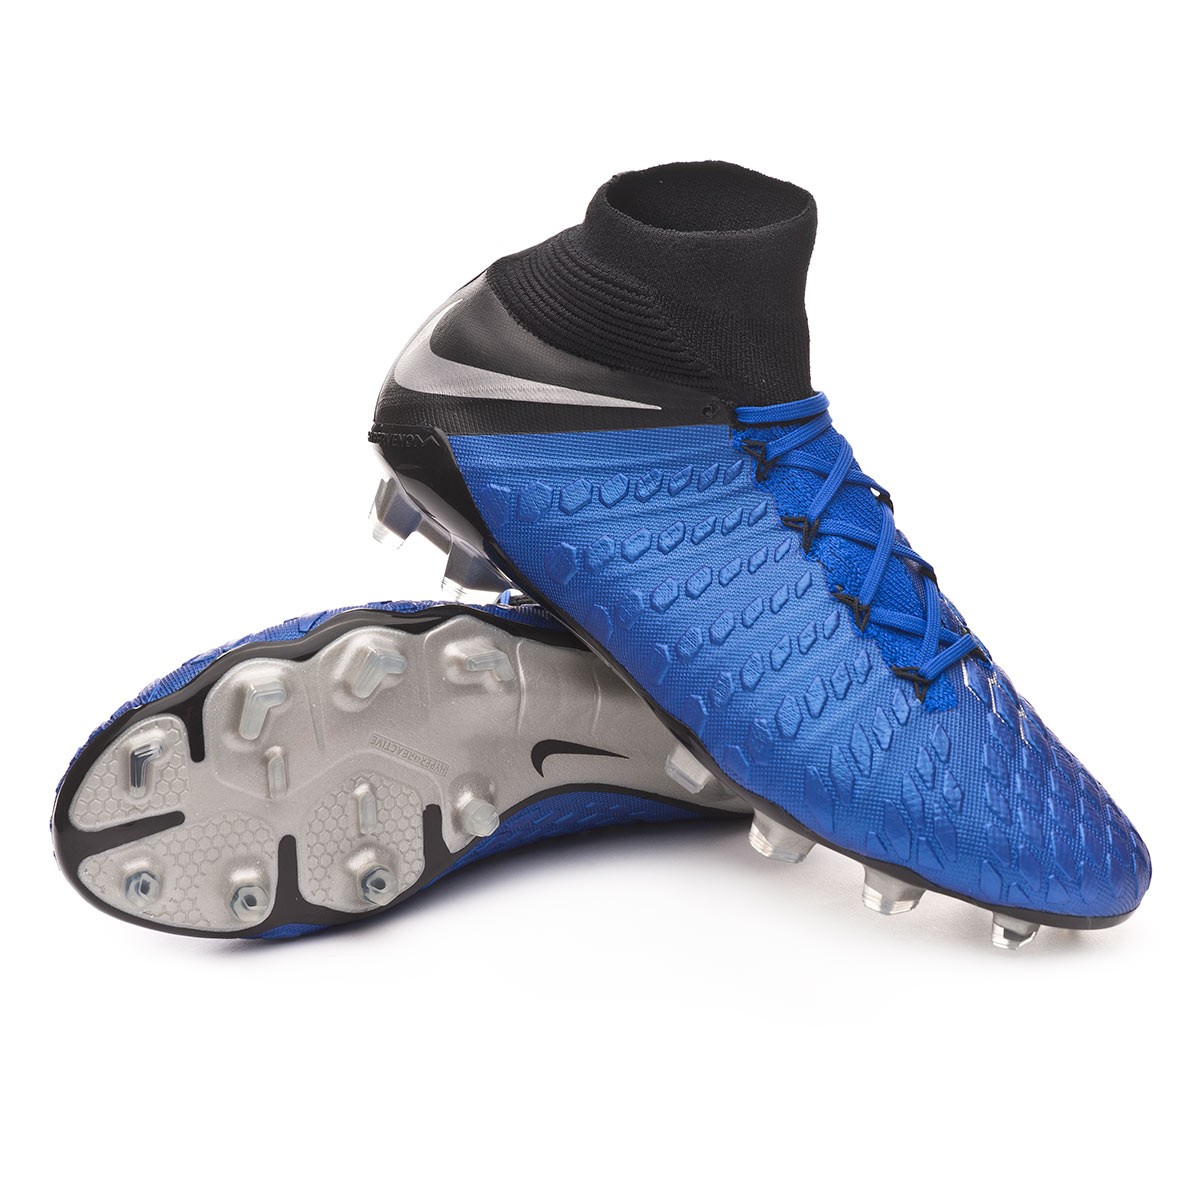 Bota de fútbol Nike Hypervenom Phantom III Elite DF FG Racer blue-Metallic  silver-Black-Volt - Tienda de fútbol Fútbol Emotion